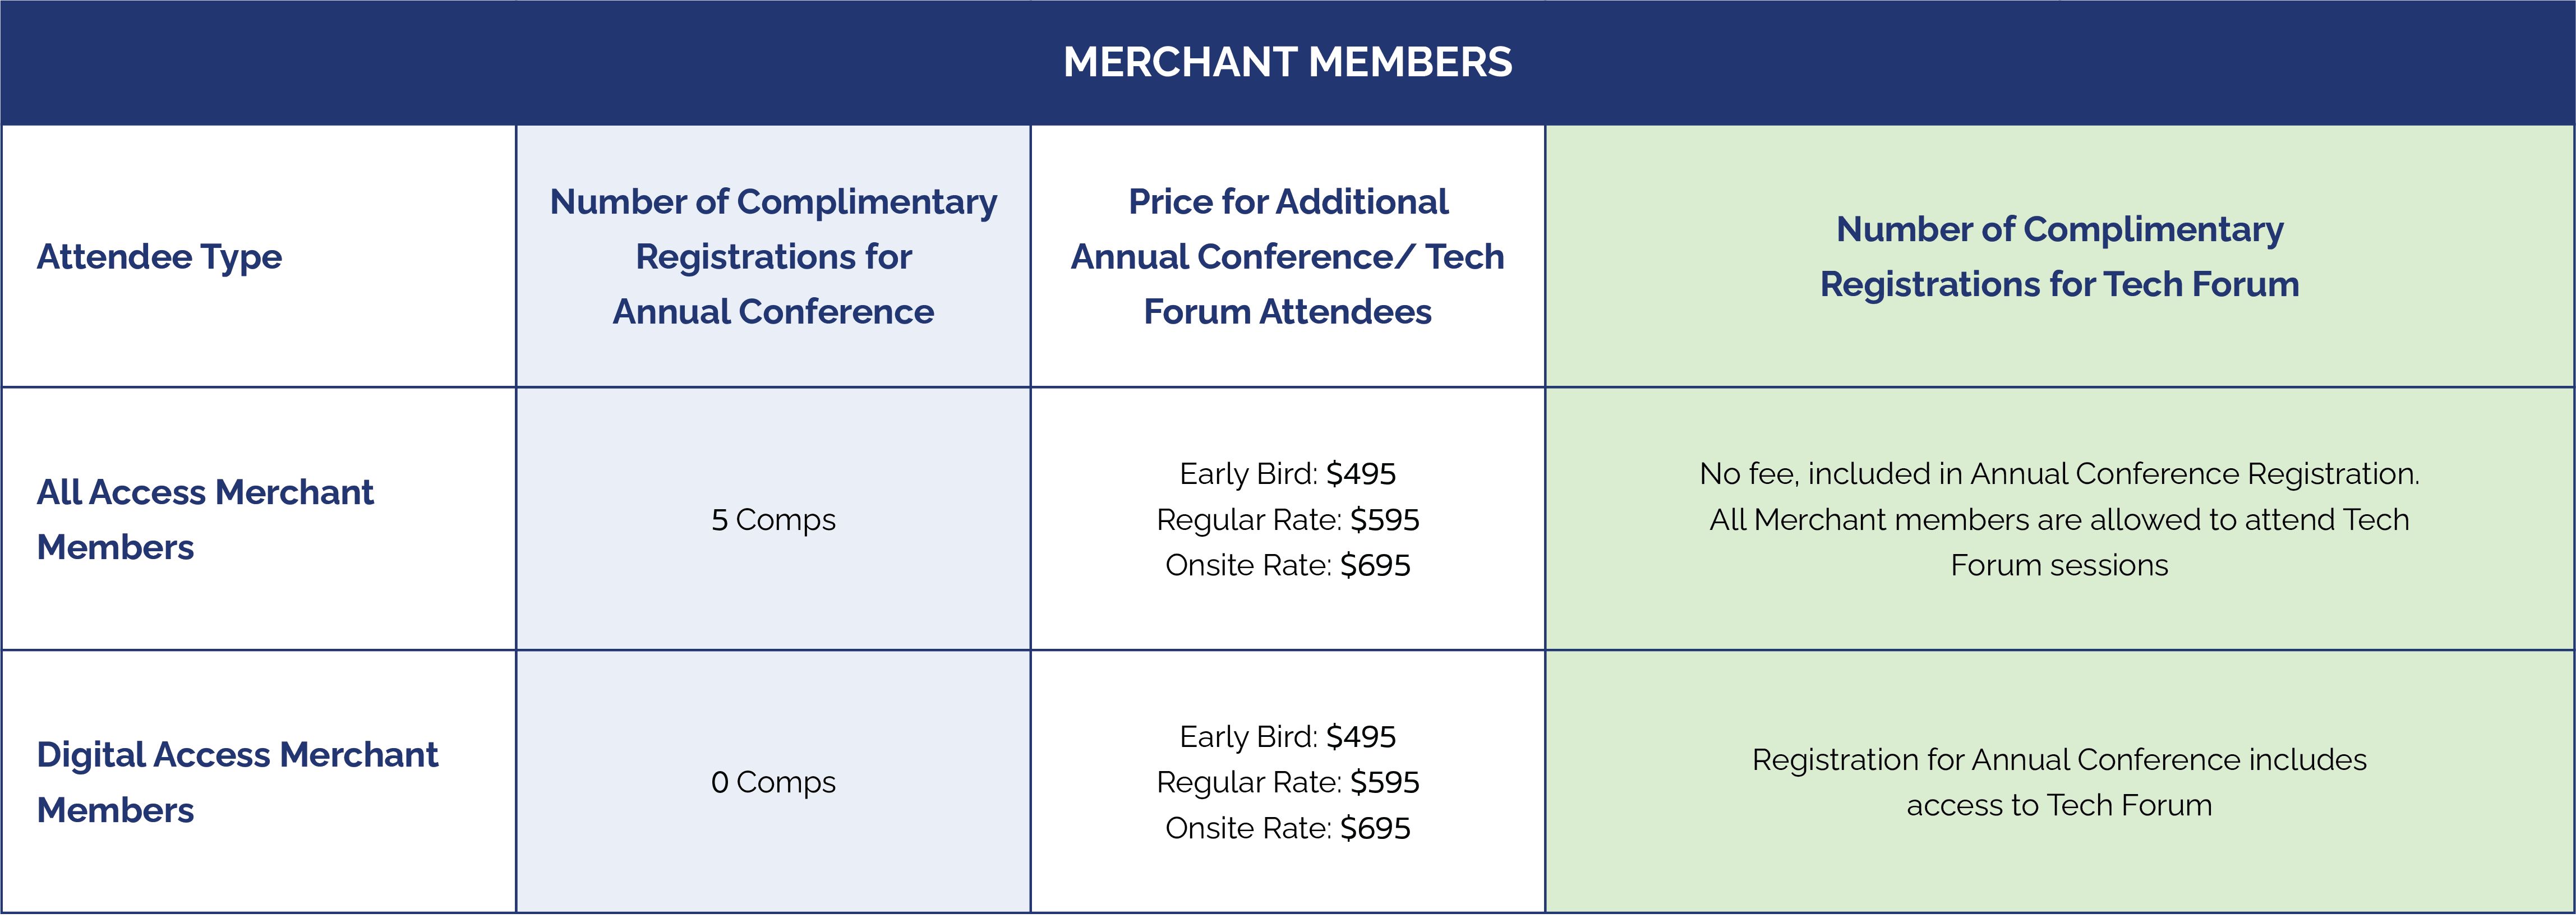 Merchant Members Registration Fees